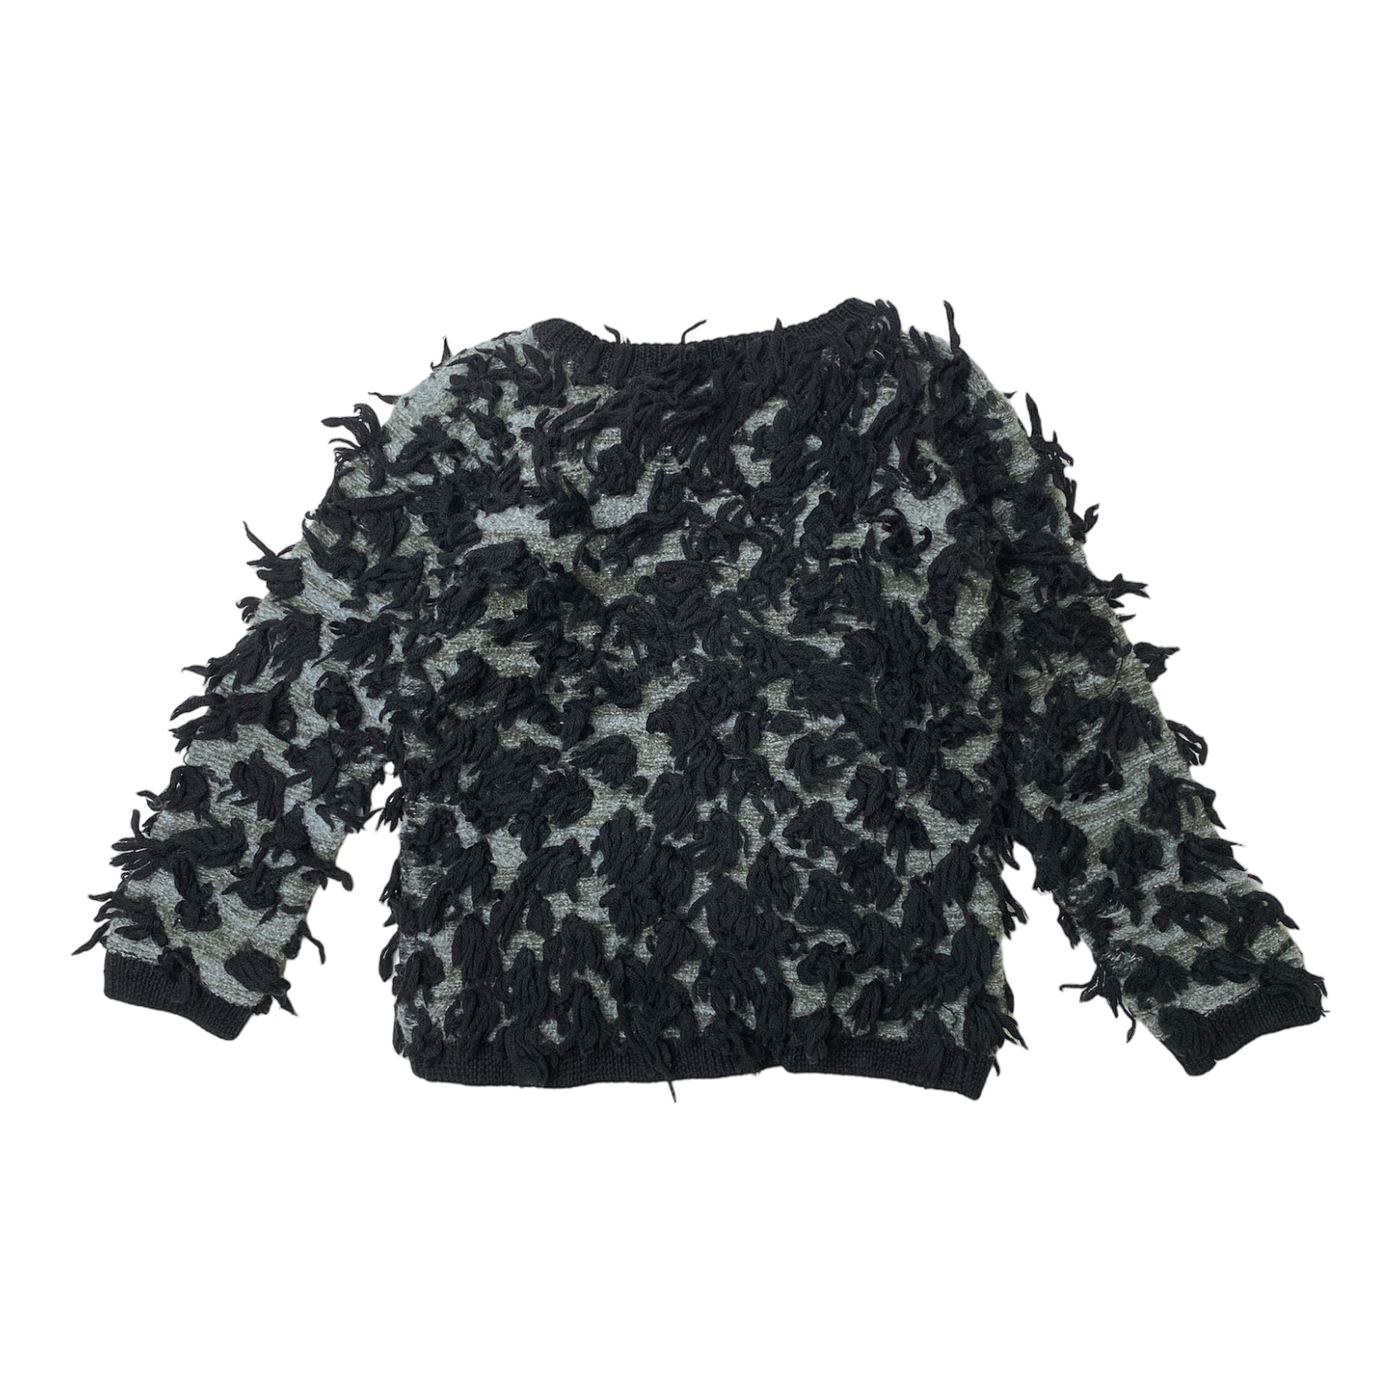 Vimma knitted shirt, black/grey | 140cm